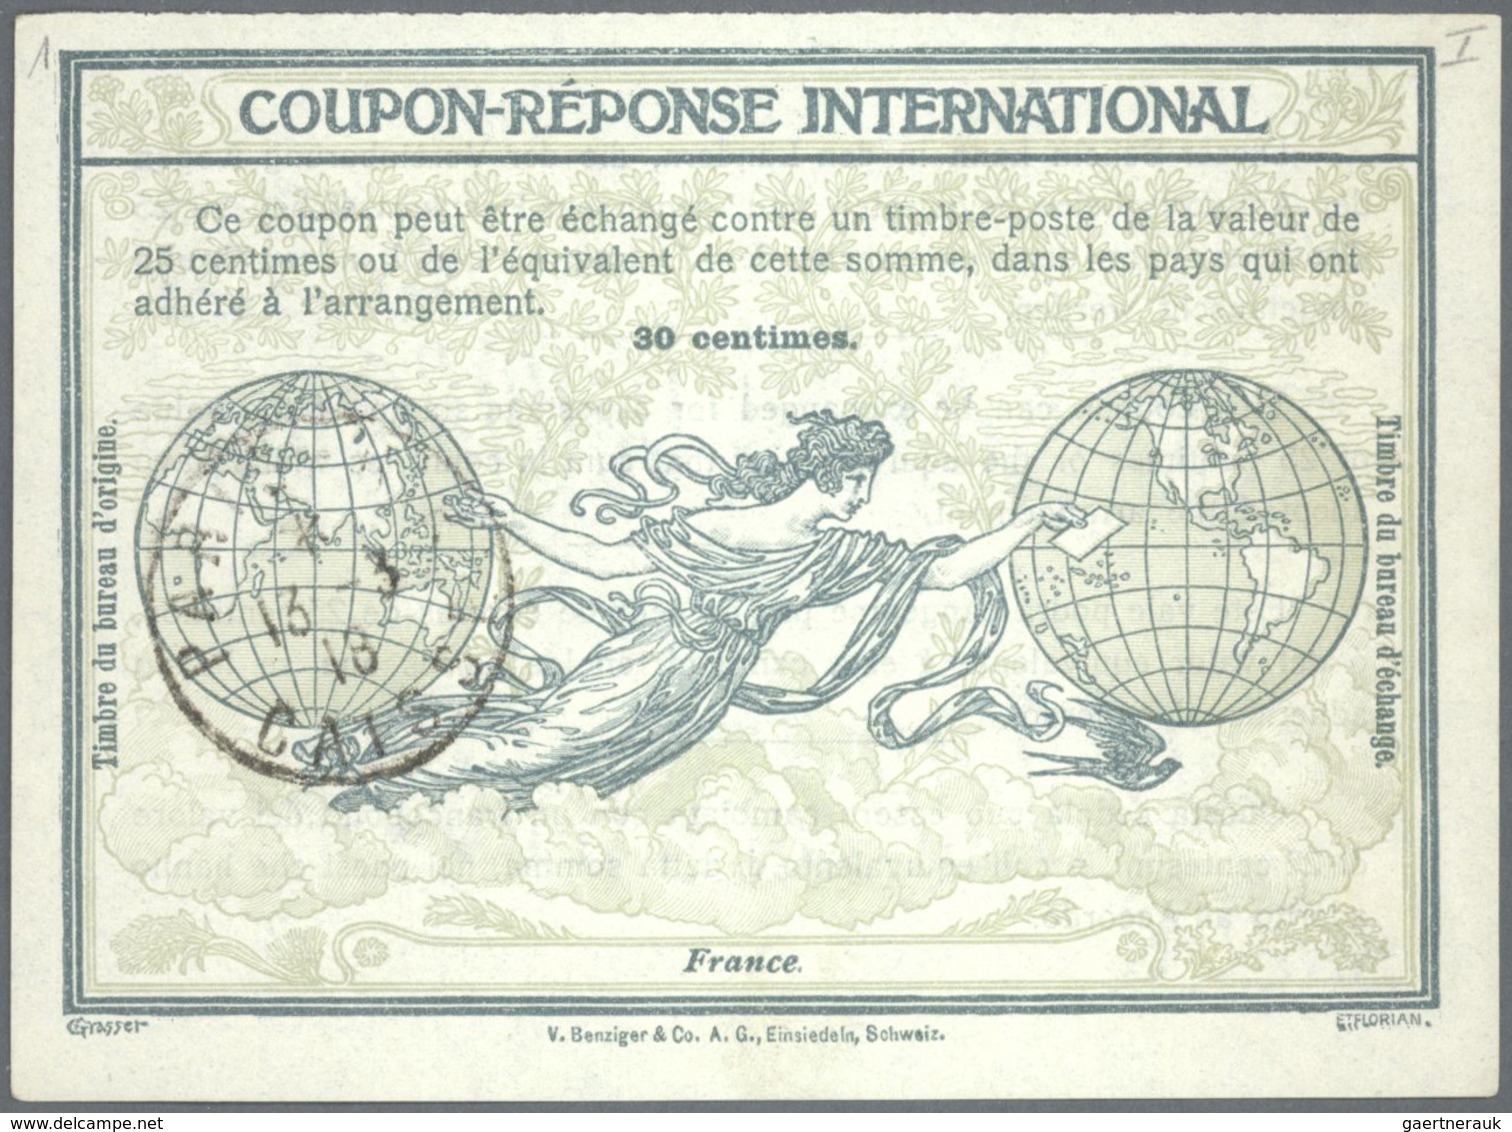 24538 Alle Welt: 1907 onwards - INTERNATIONAL REPLY COUPONS (Internationale Antwortscheine): Specialized a